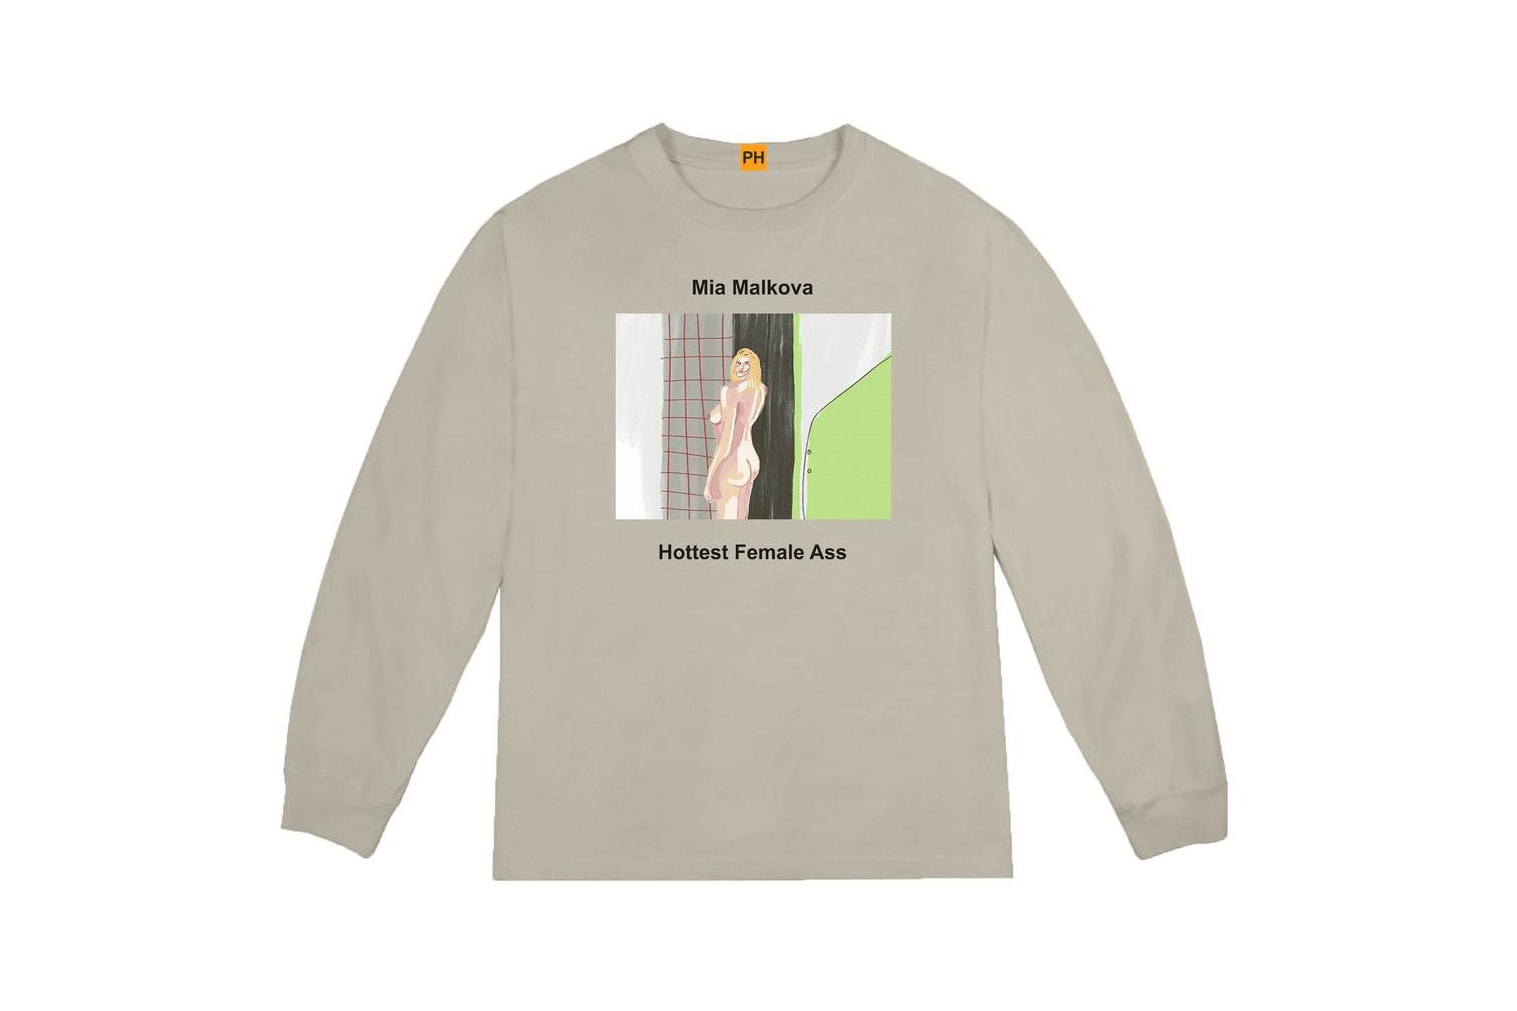 Pornhub YEEZY Kanye West Long Sleeve Shirt Mia Malkova Collaboration Capsule Collection